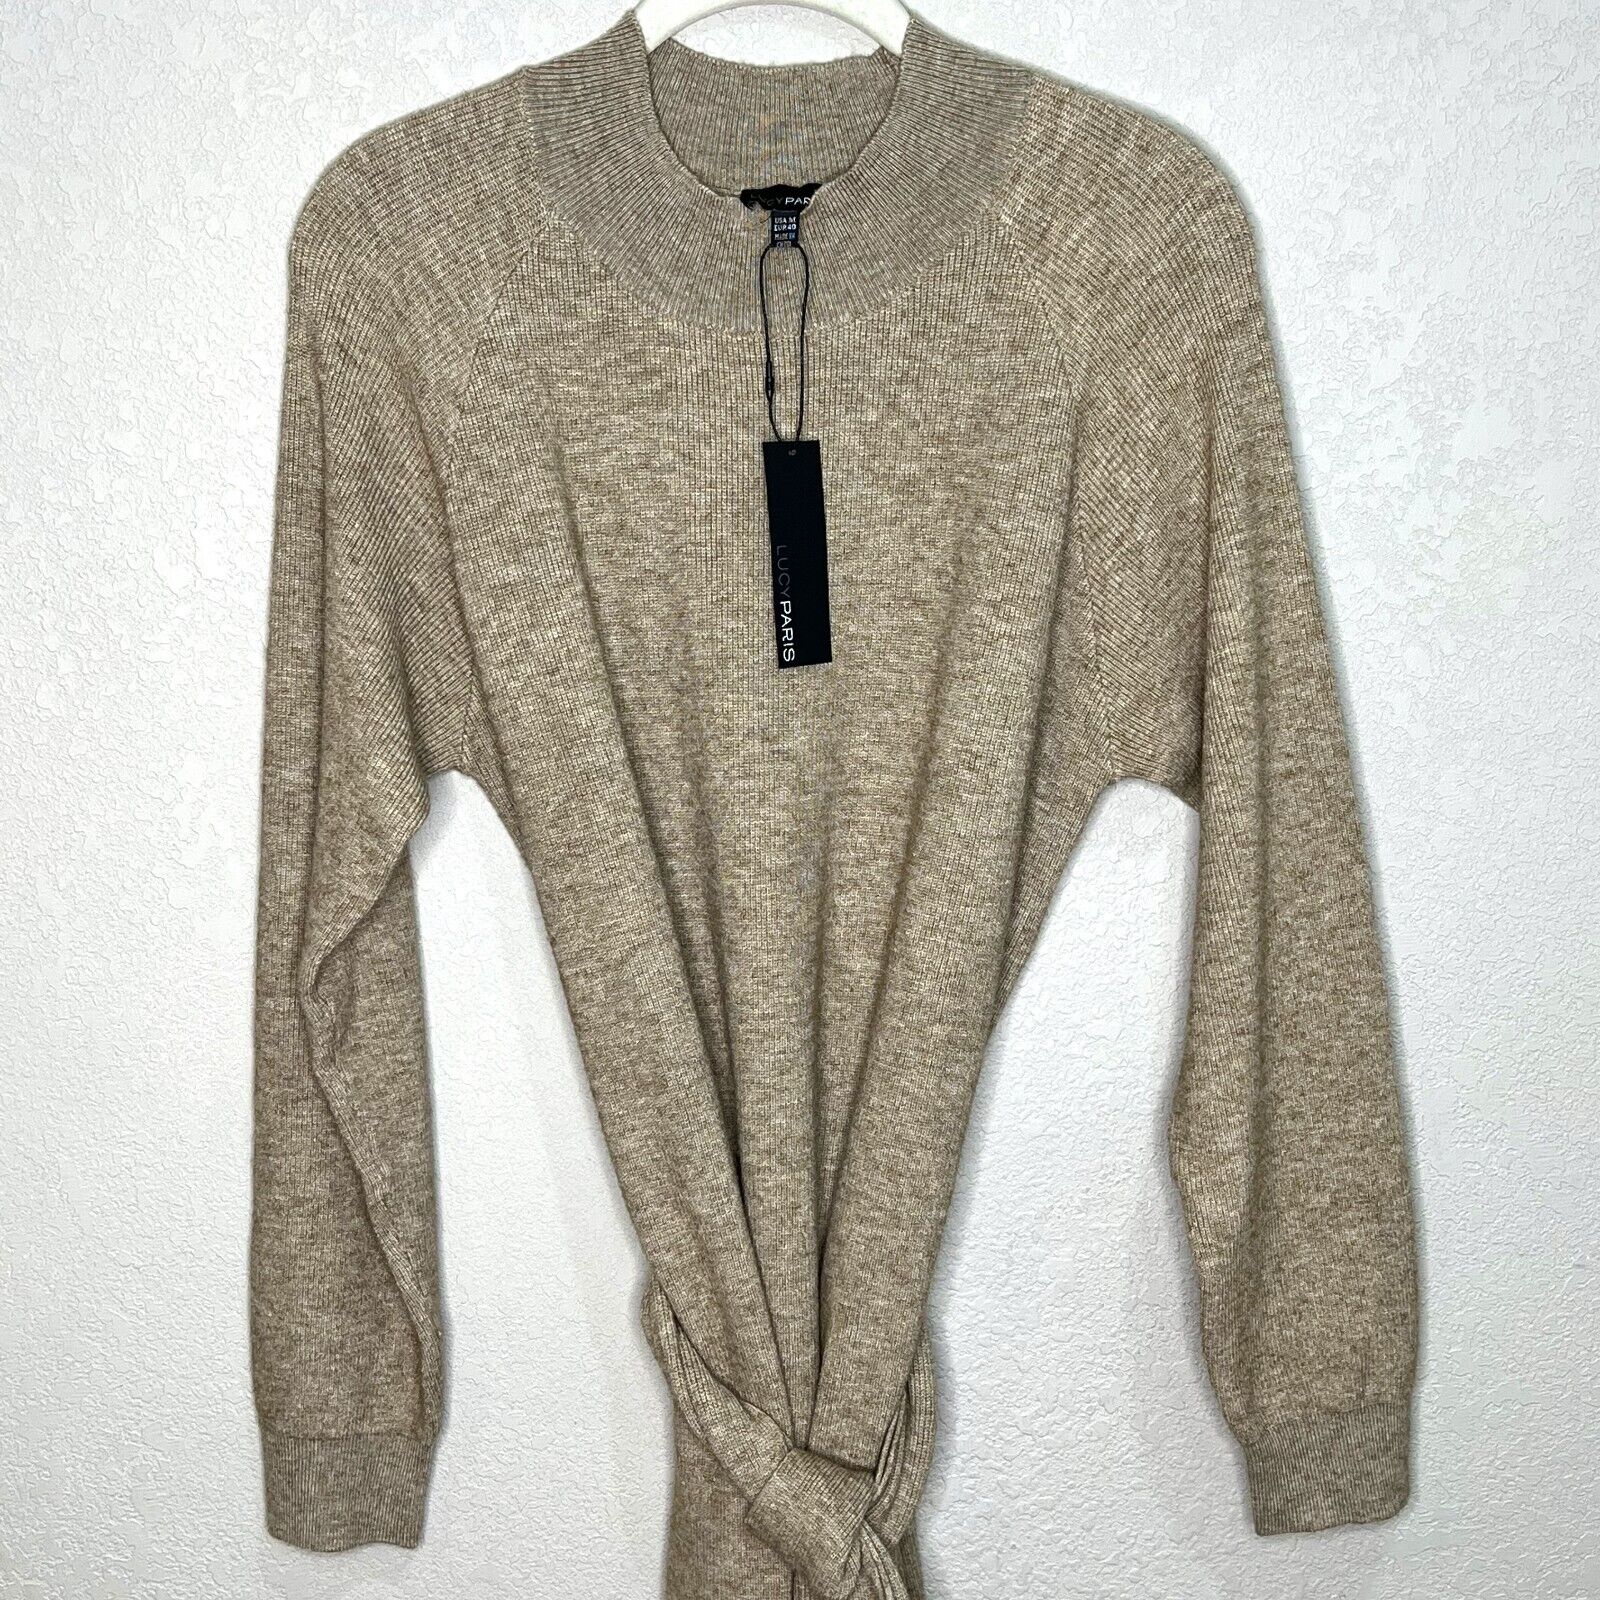 New Lucy Paris Tan Indria Sweater Dress Size Medium